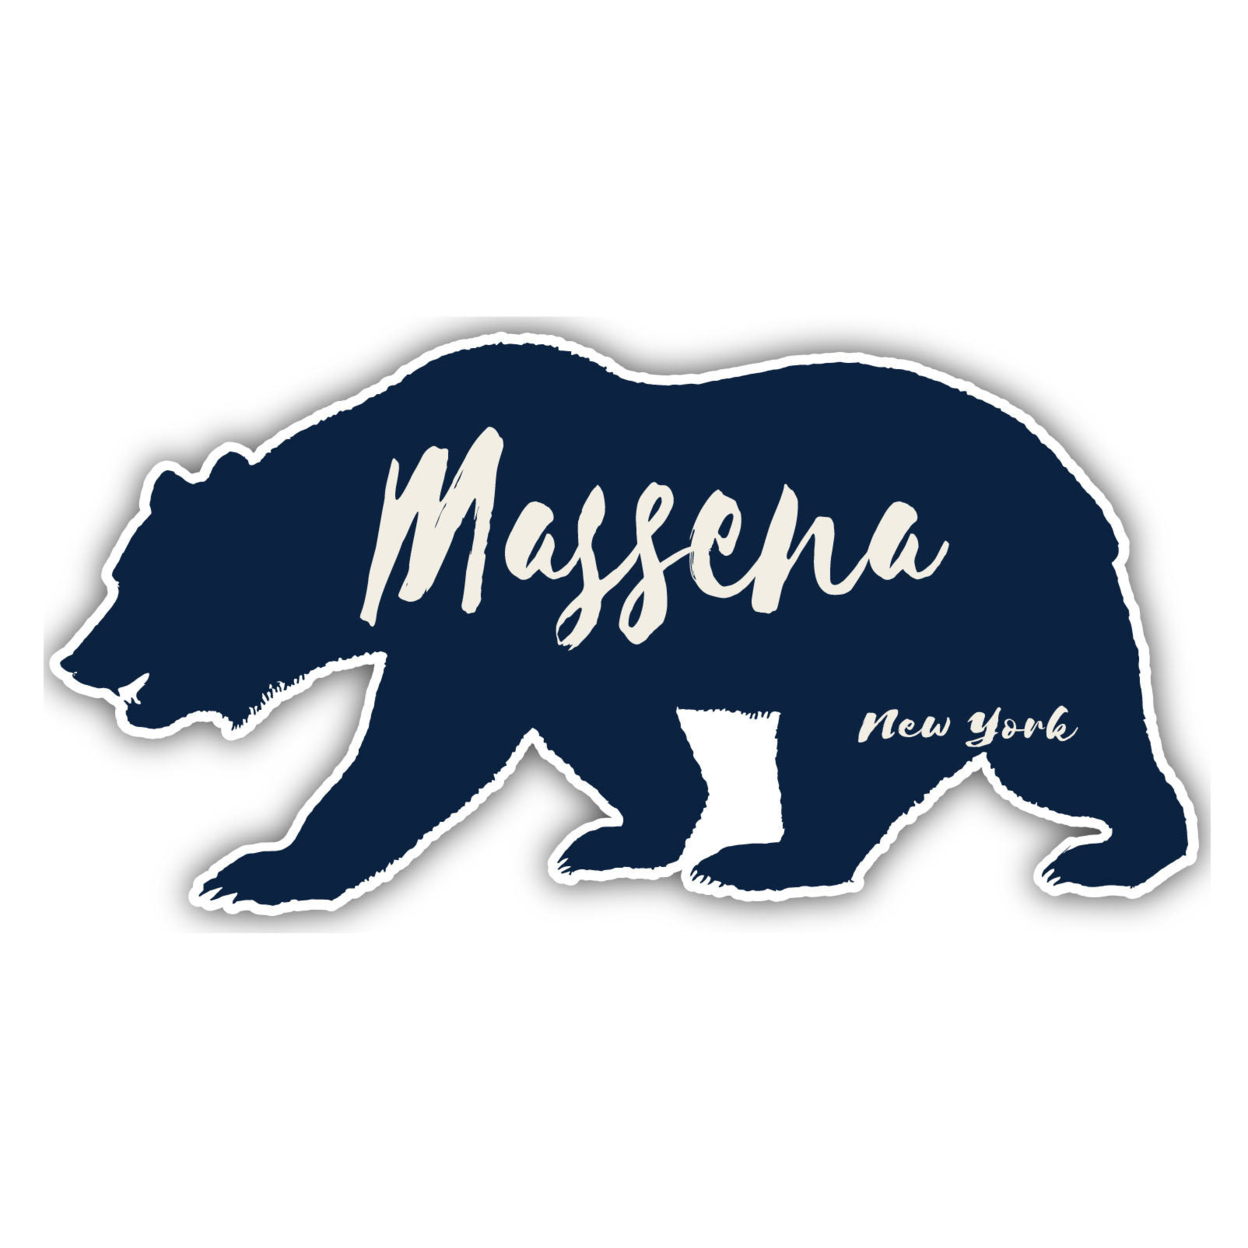 Massena New York Souvenir Decorative Stickers (Choose Theme And Size) - 2-Inch, Bear